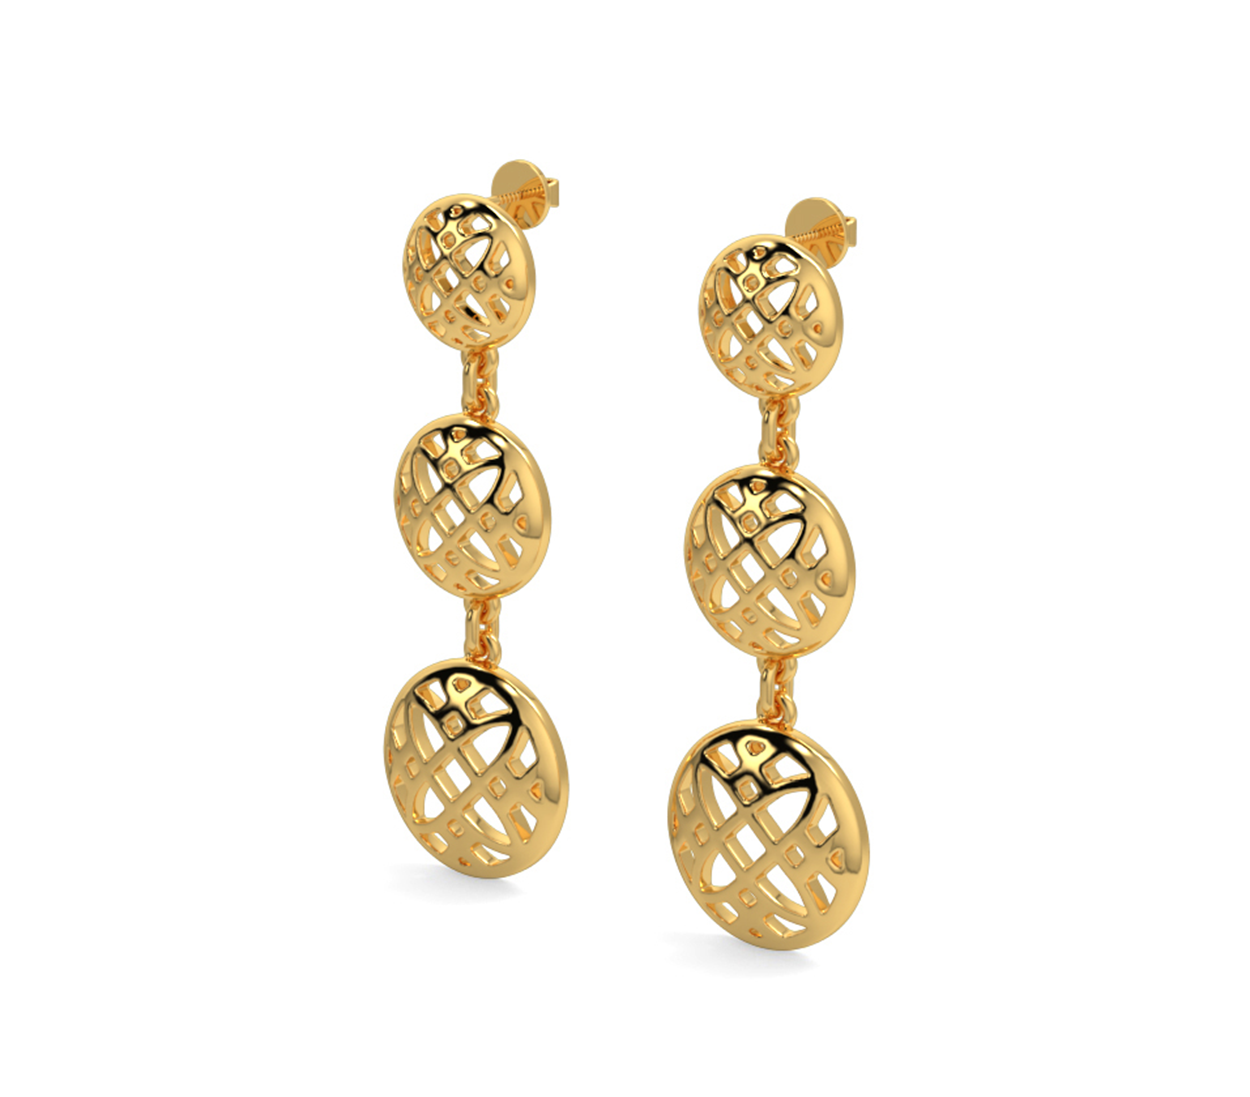 Aggregate 193+ elegant gold earrings designs best